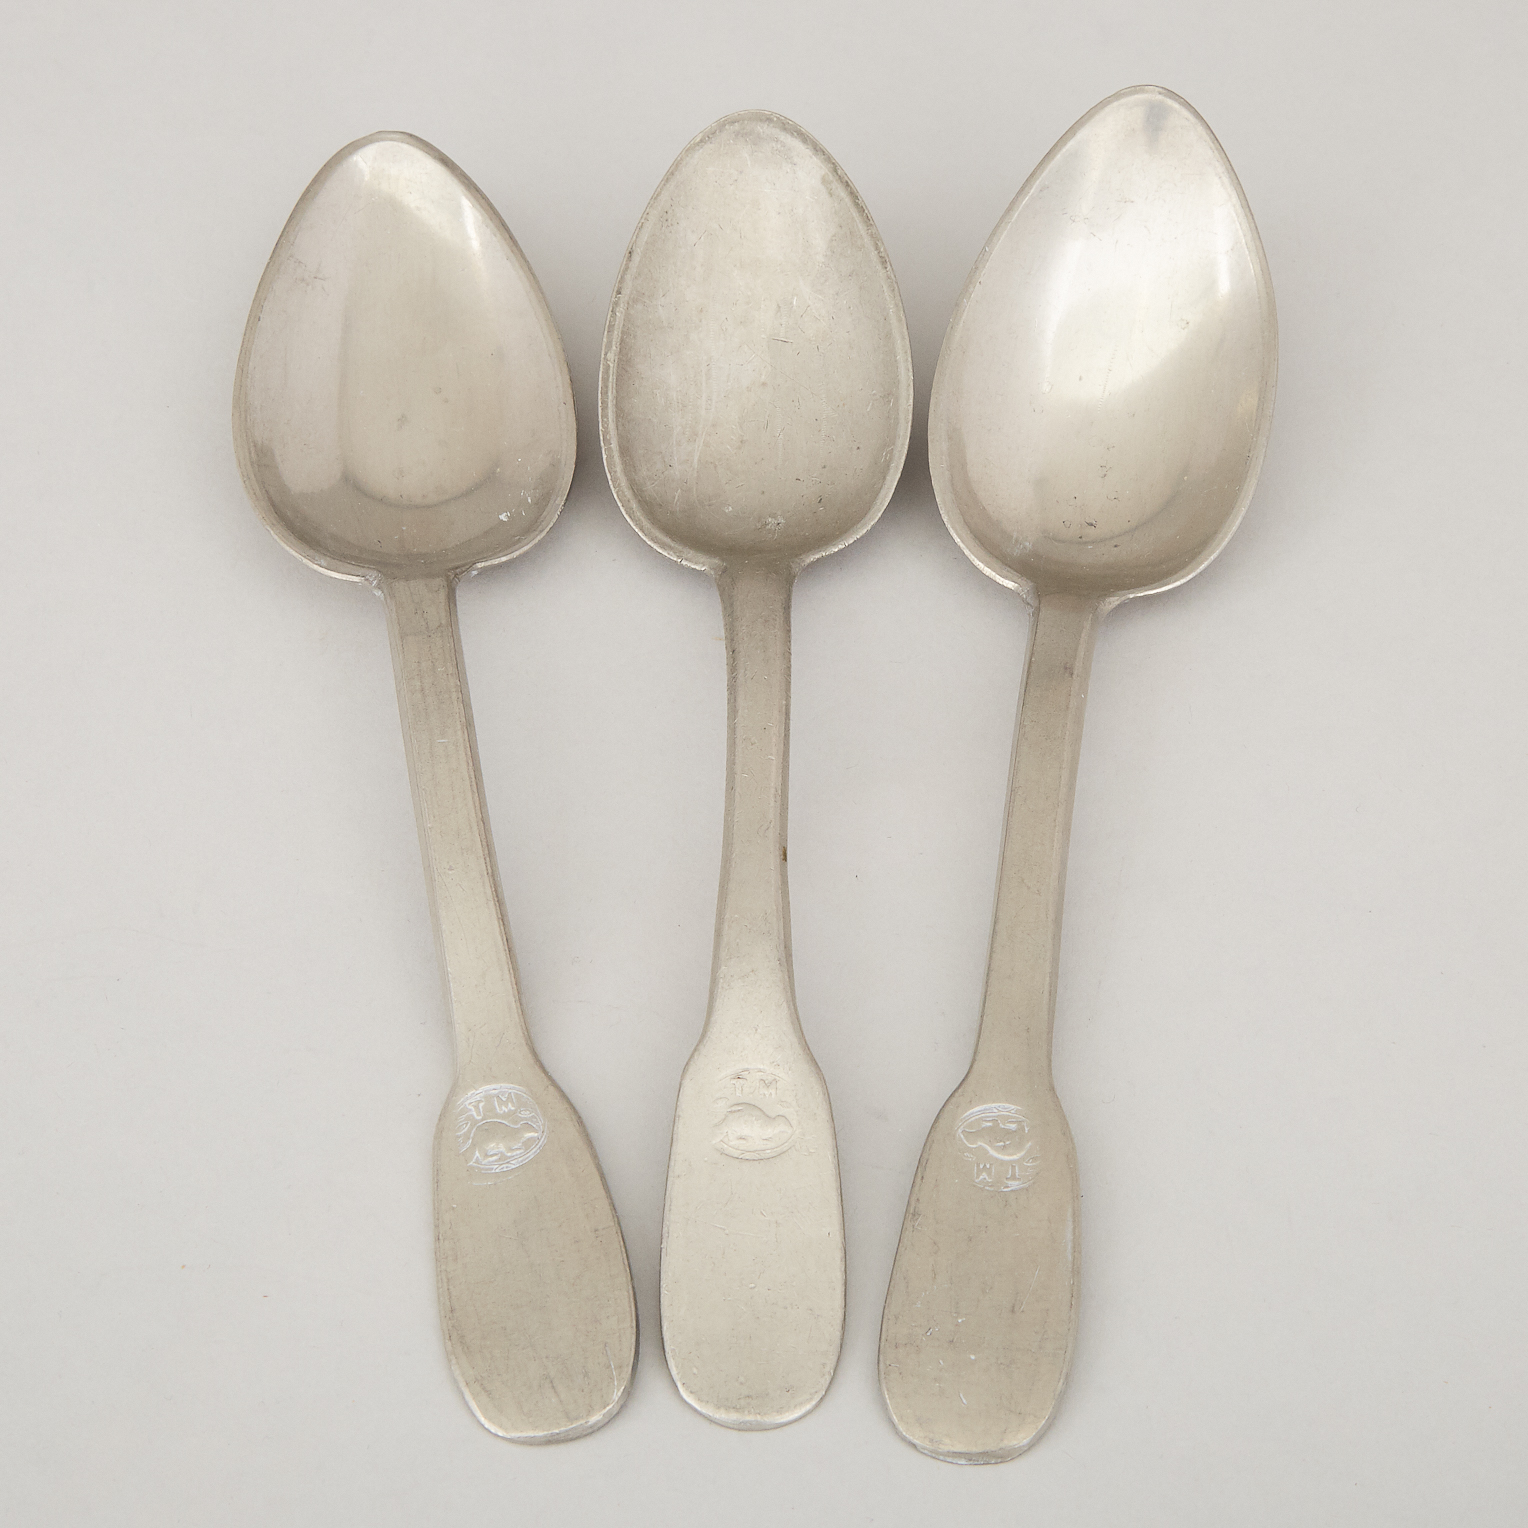 Three Canadian Pewter Table Spoons, Thomas Menut, Montreal, 19th century